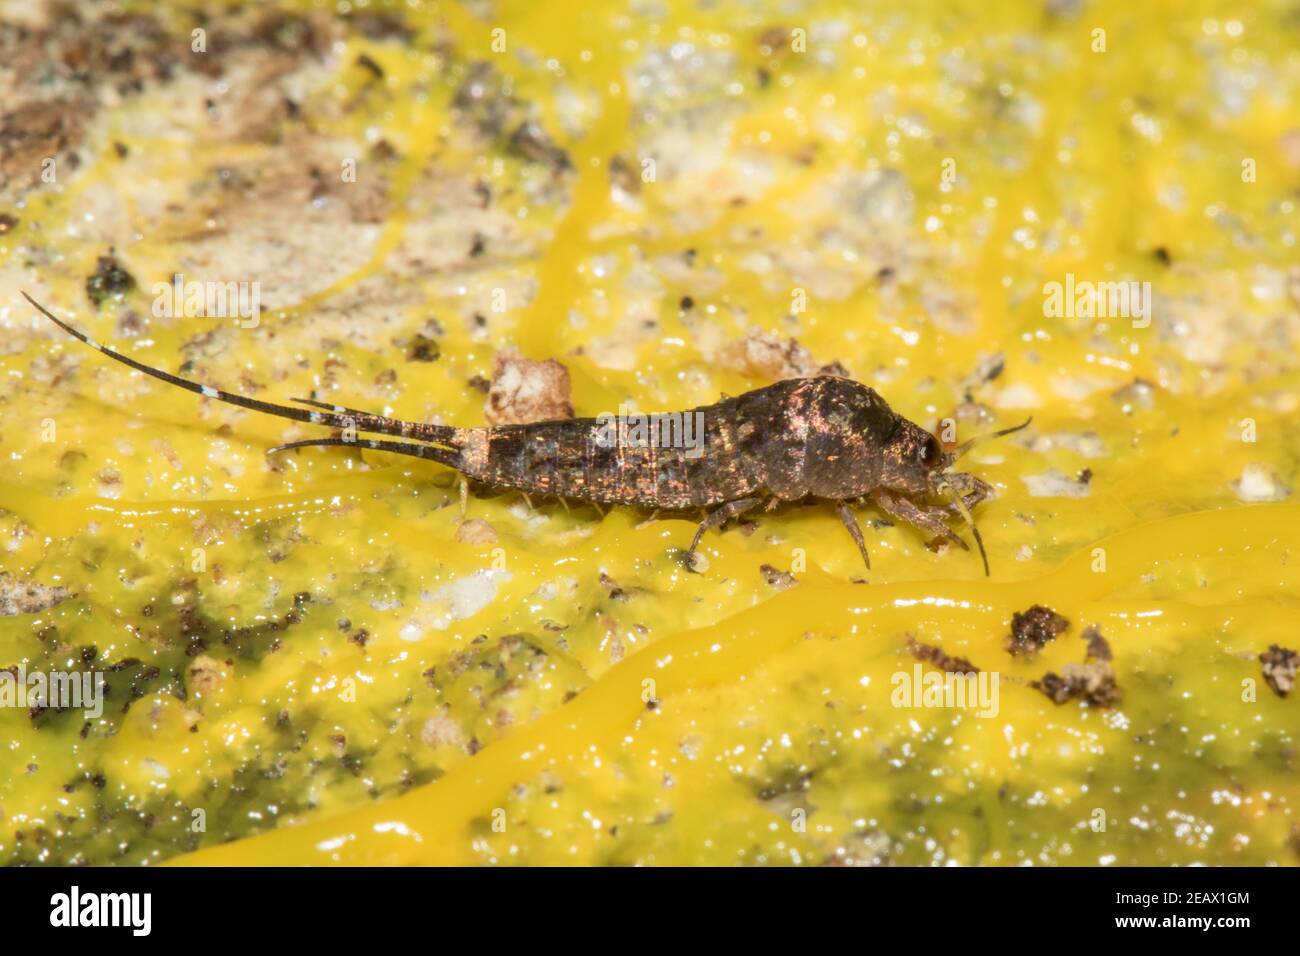 Close-up of a firebrat on a fungus. Stock Photo